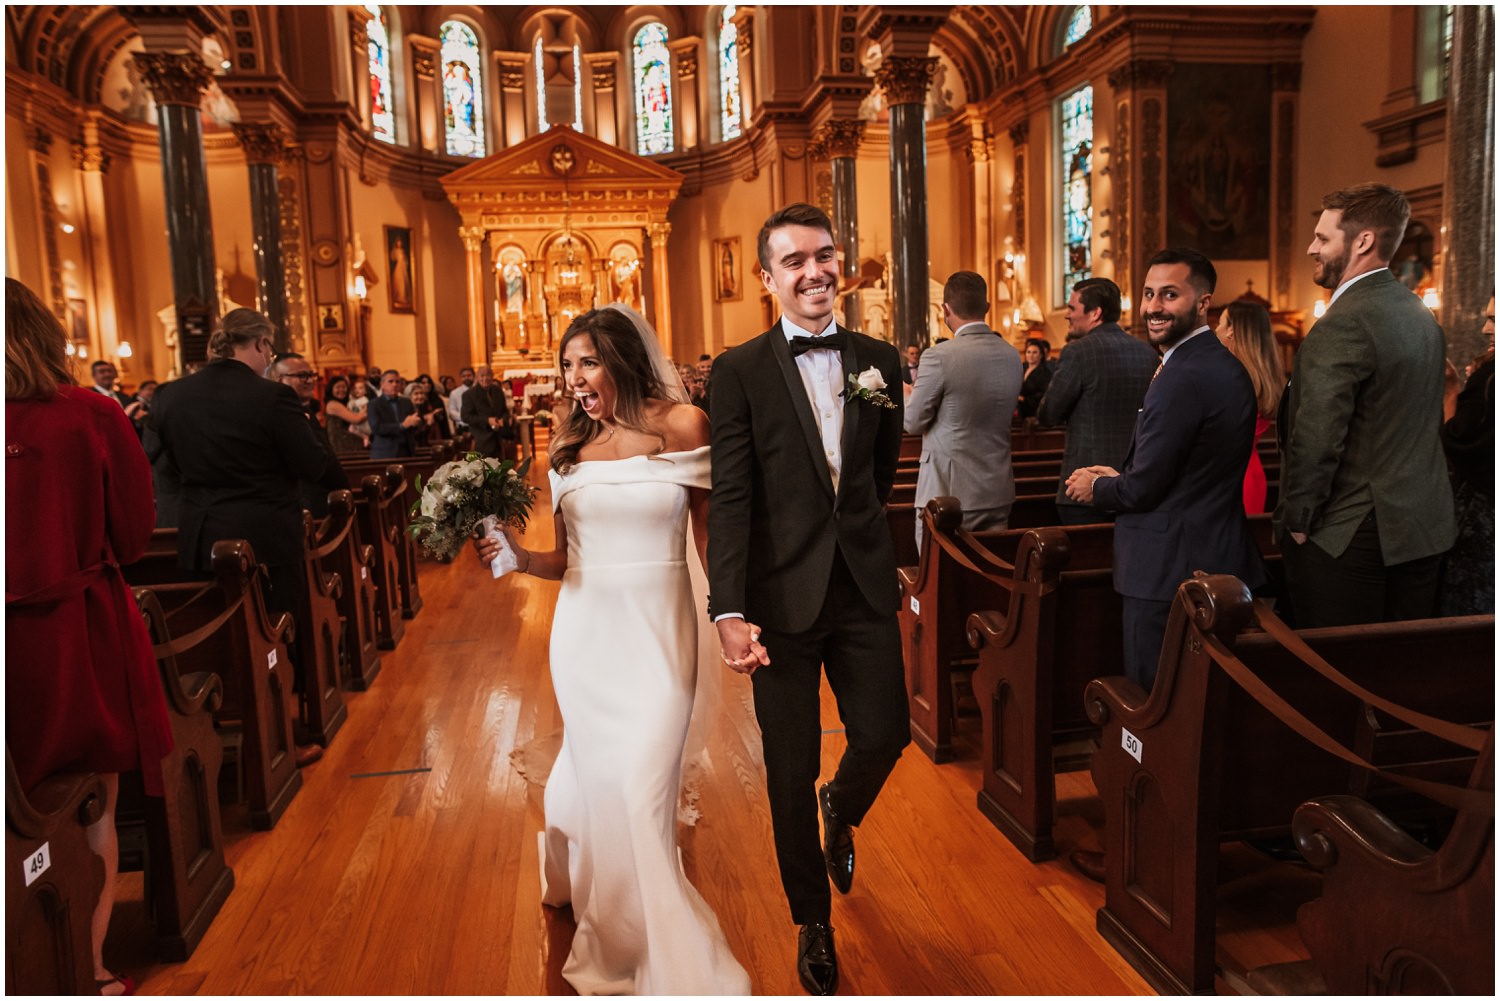 St. Hedwig Catholic Church Chicago wedding ceremony photos